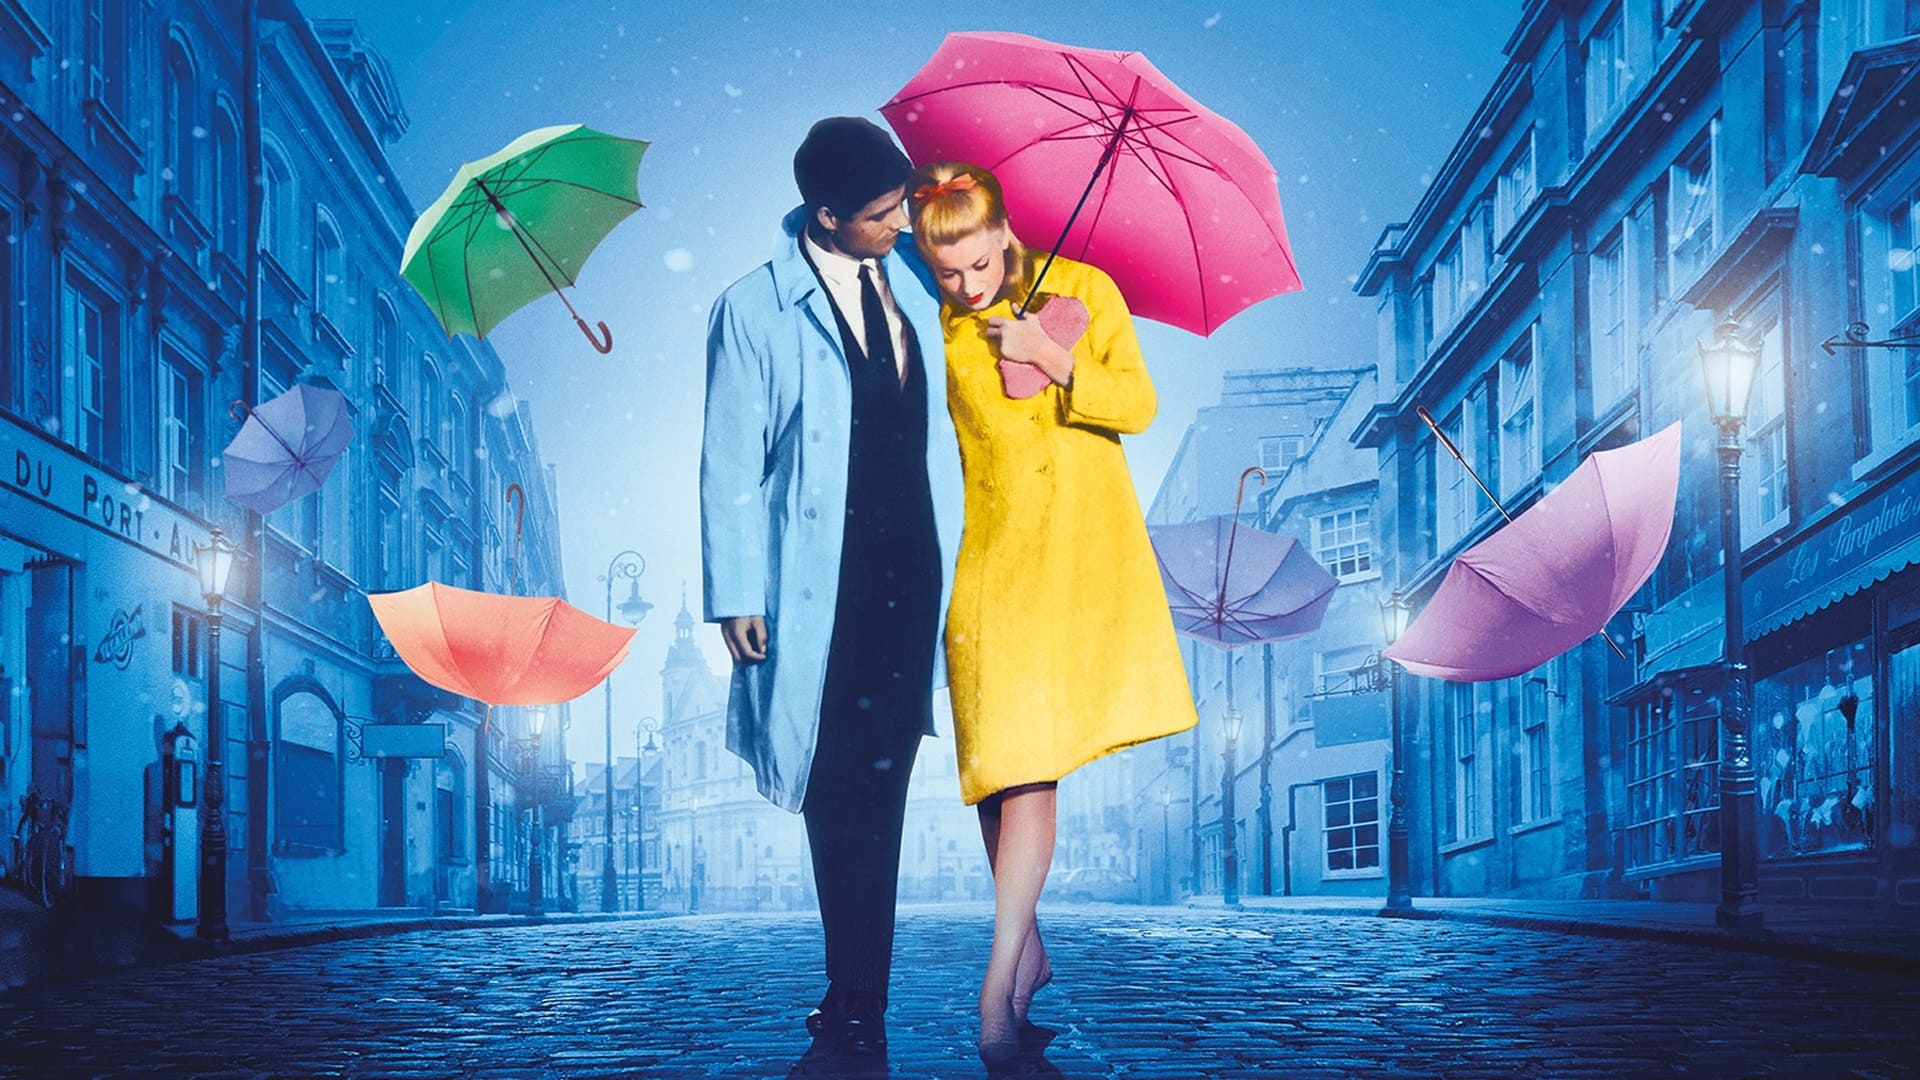 Image du film Les Parapluies de Cherbourg shkcxzwgb7wz8osvshujjazd6wvjpg